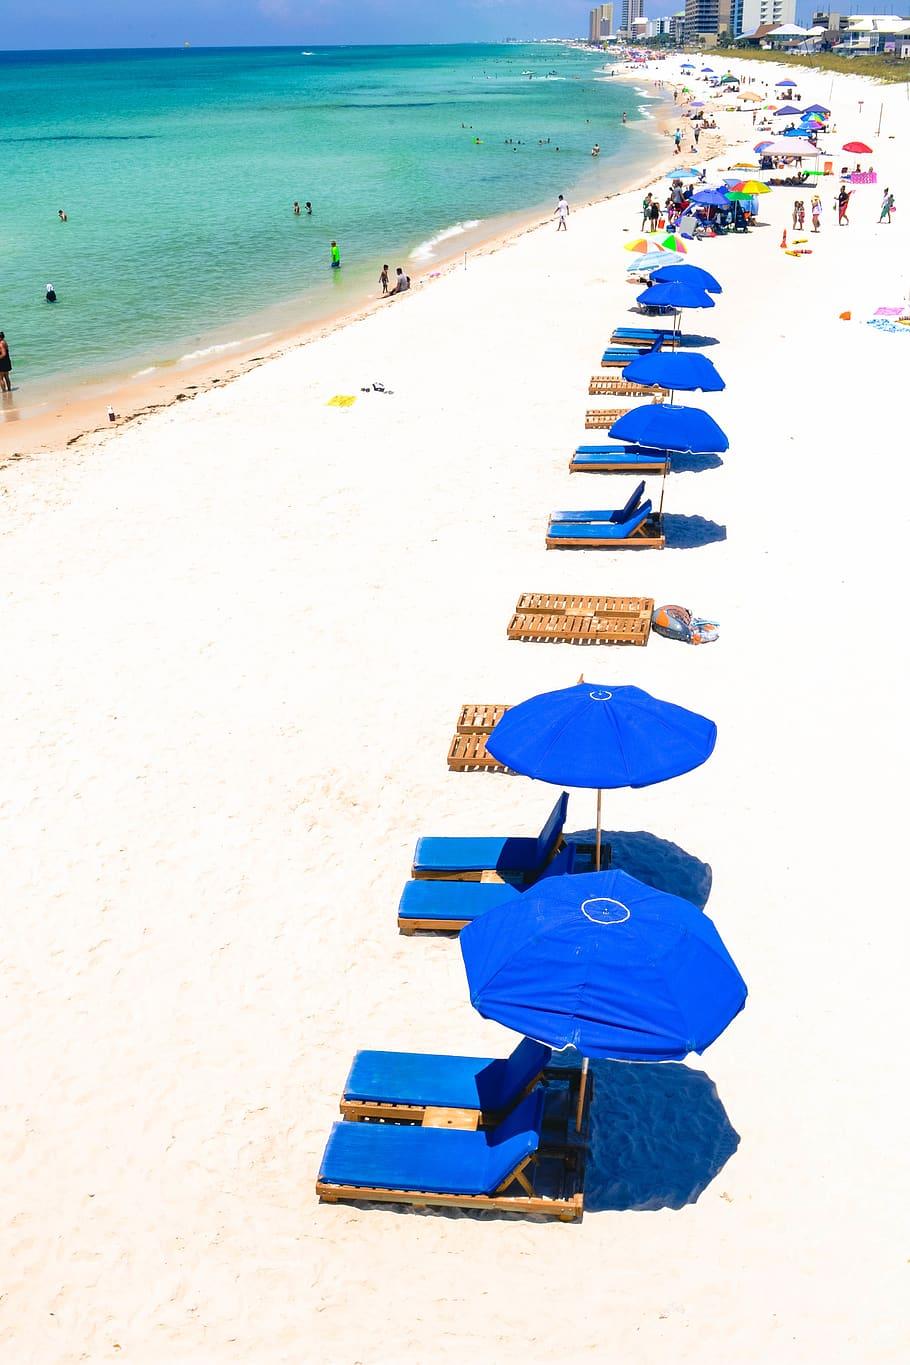 HD wallpaper: united states, panama city beach, florida, chairs, summer, water